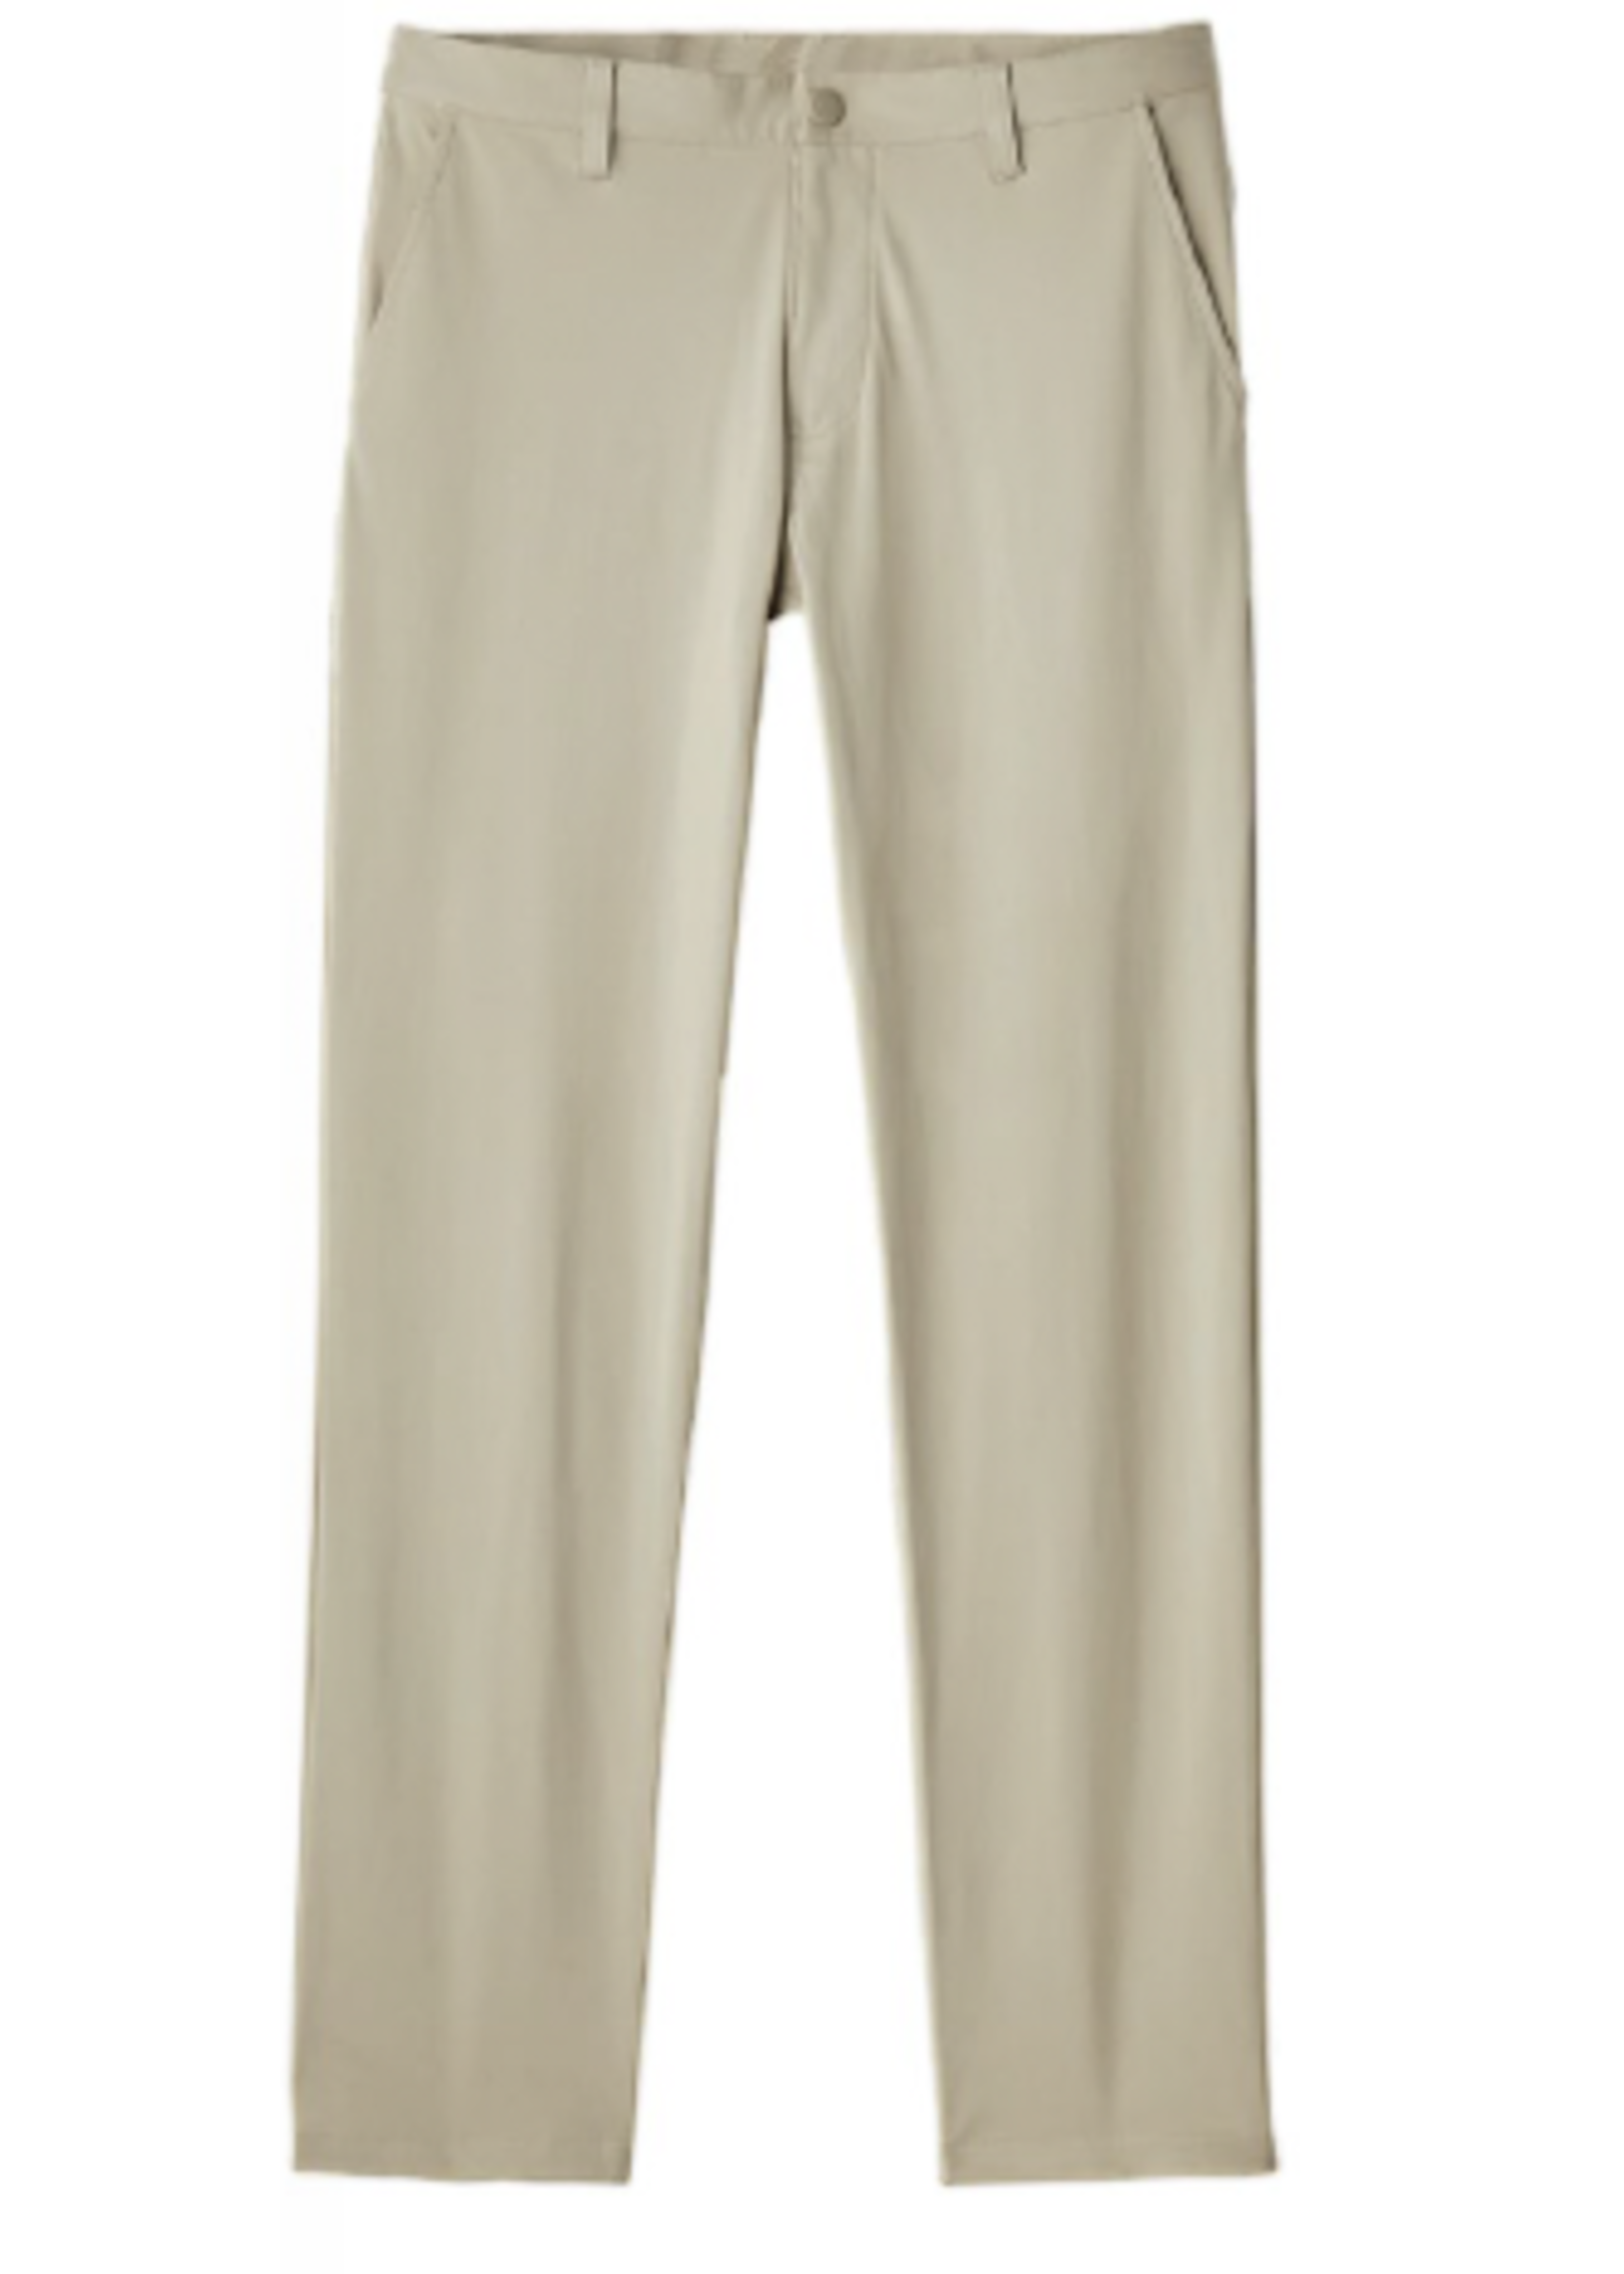 Southern Tide Channel Marker Classic Fit Pants - Khaki | Nowells Clothiers